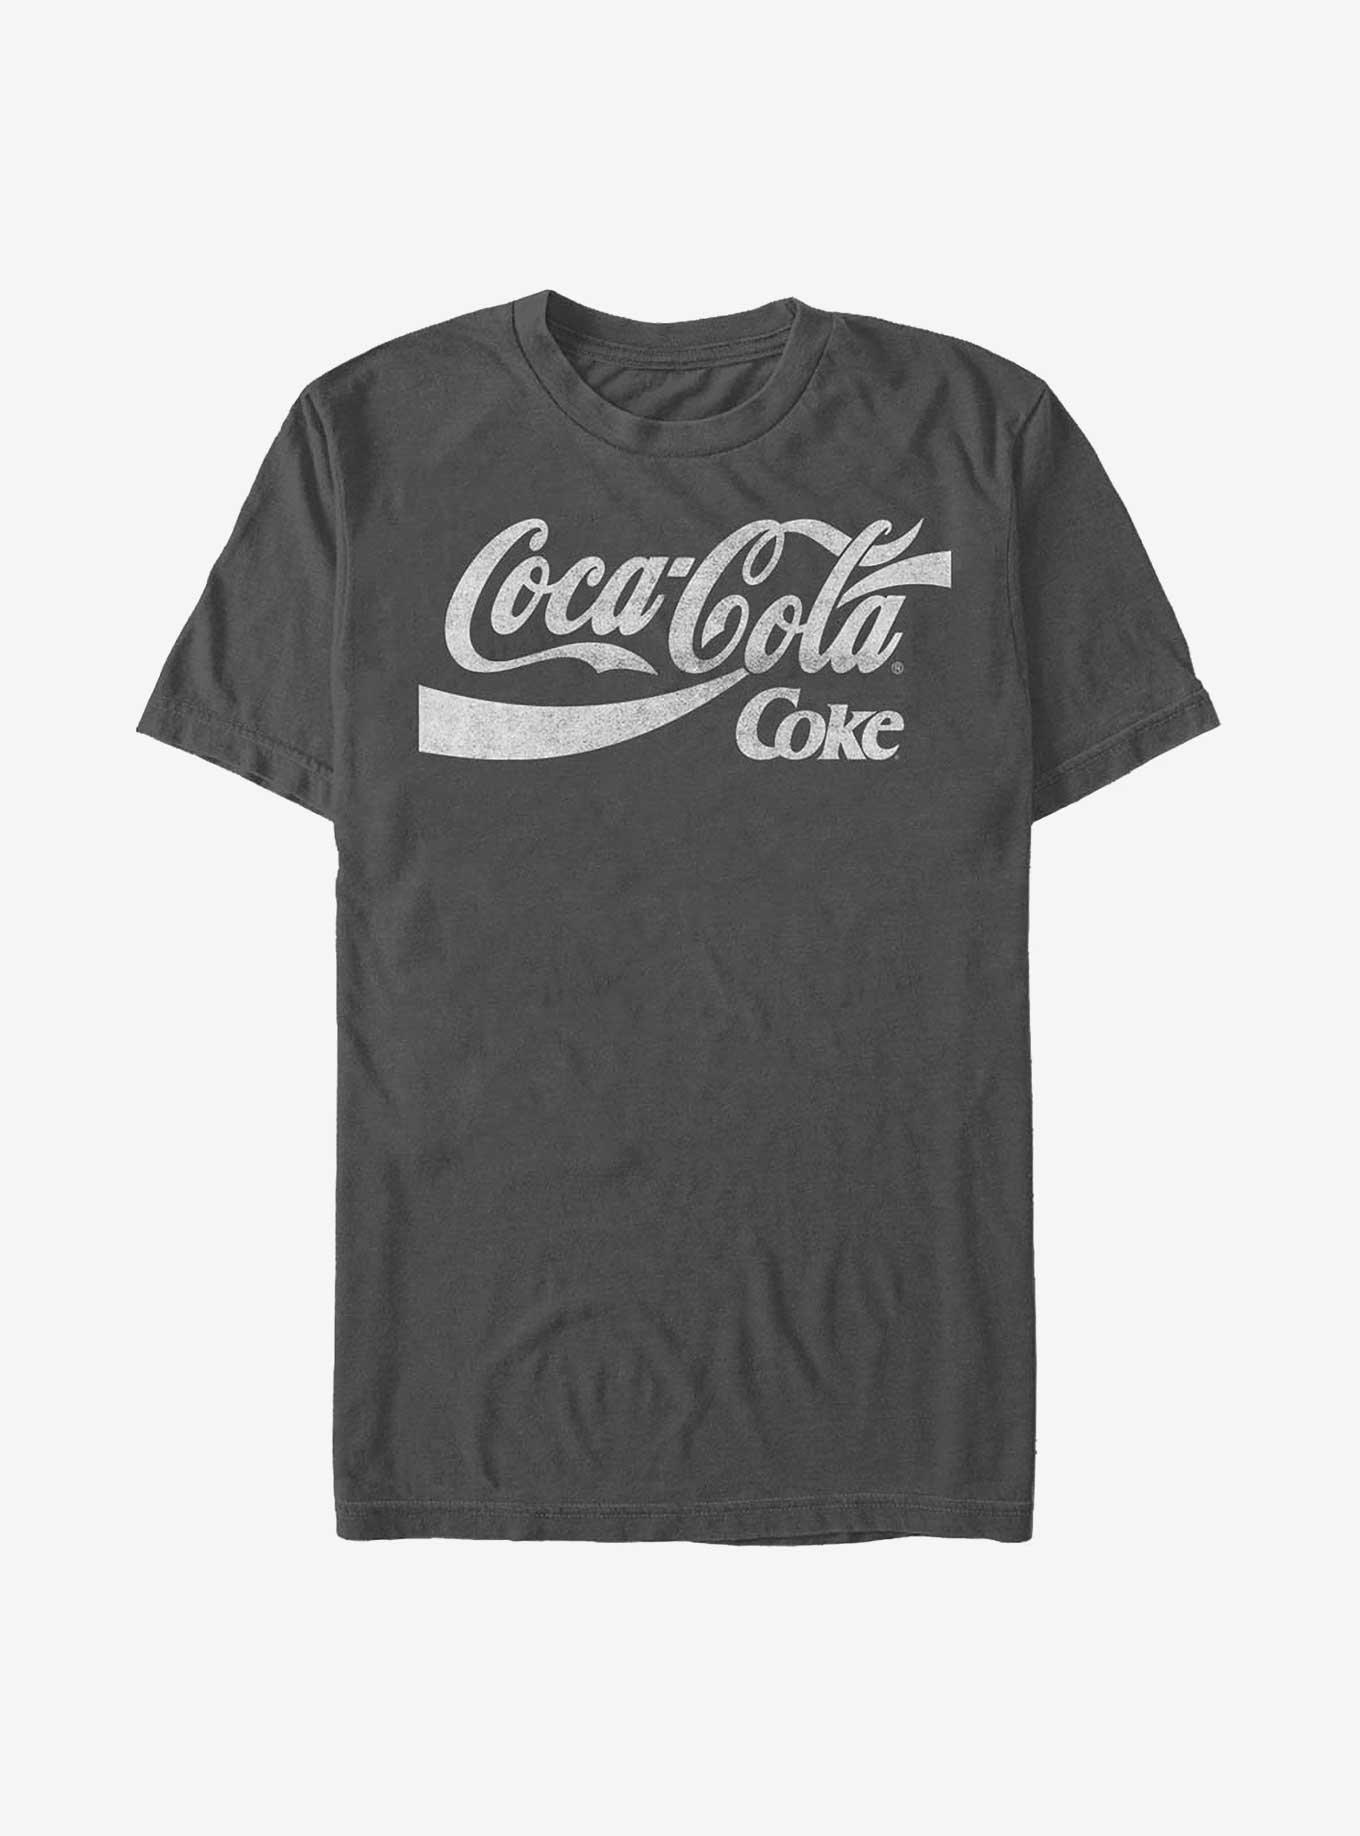 Coca-Cola Two Coke Logos T-Shirt